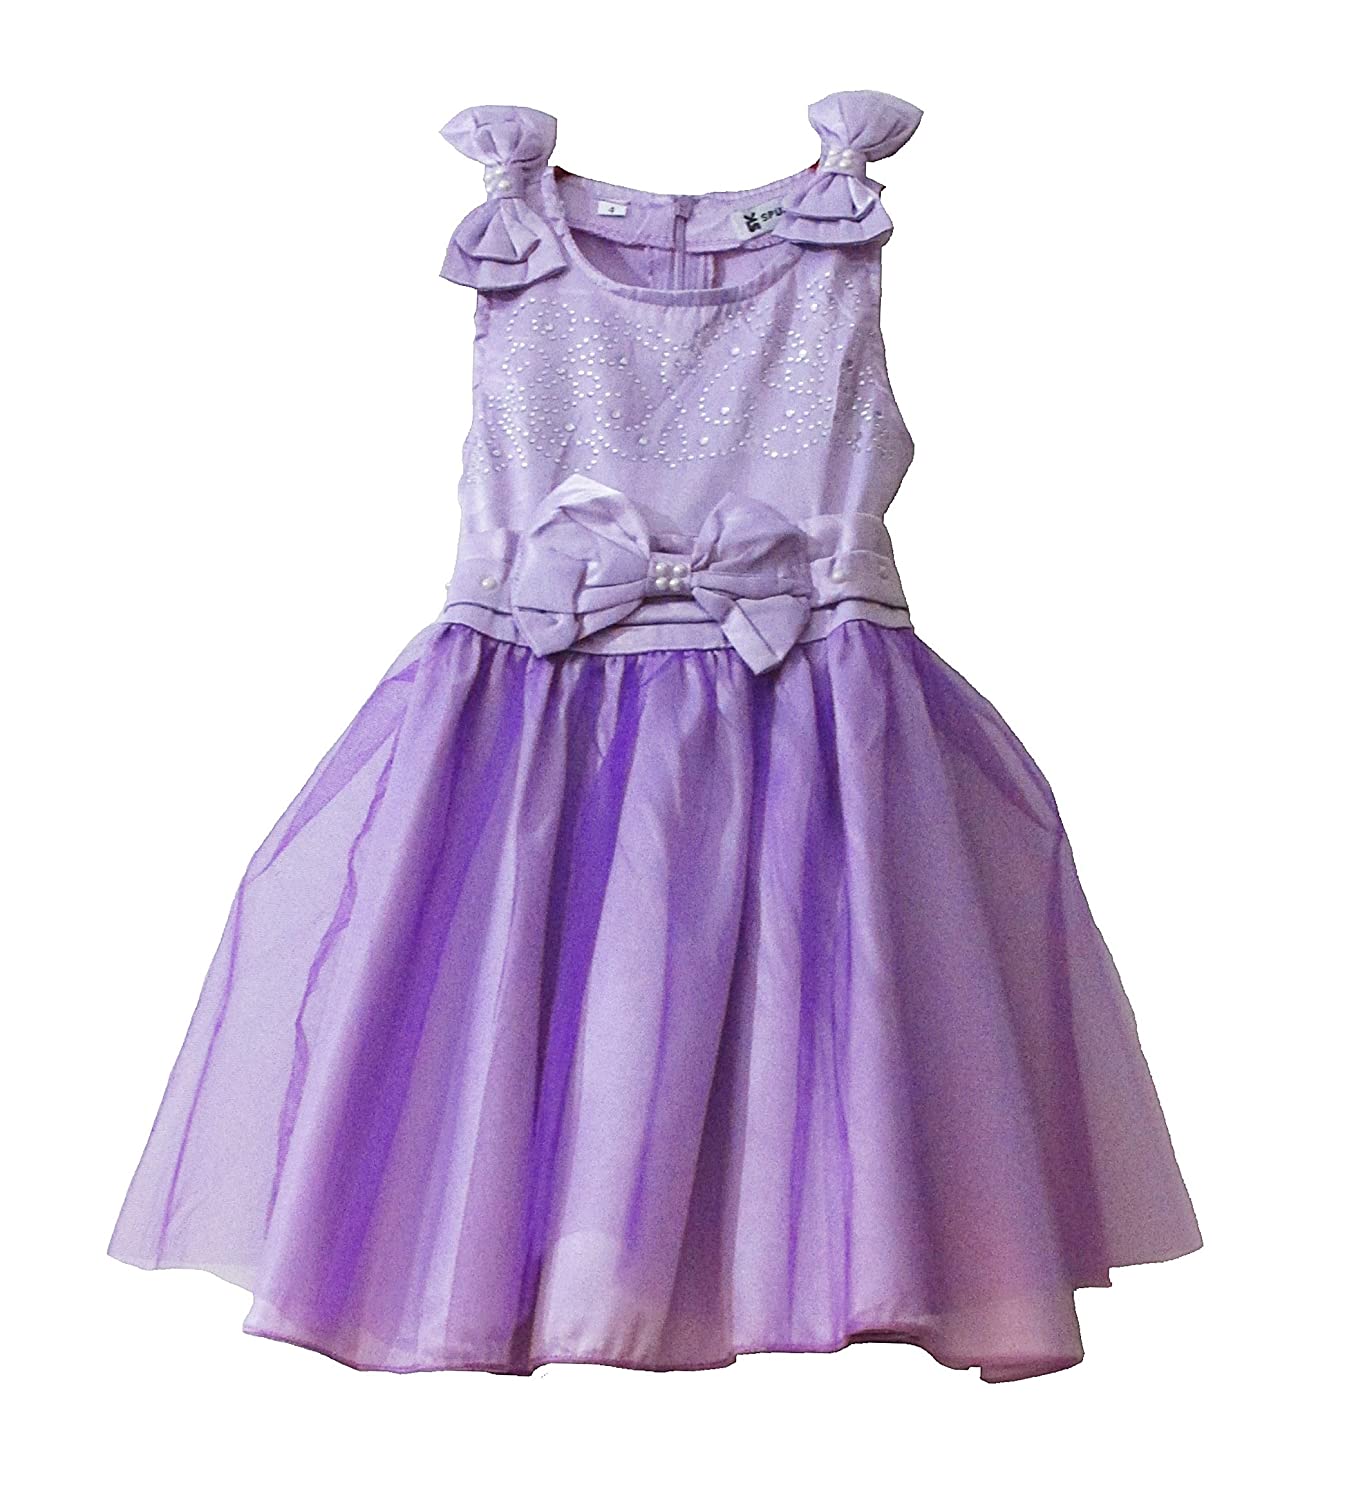 Buy Birthday Dress For Girls Online For 4 Years Girls Frocks – Wish Karo